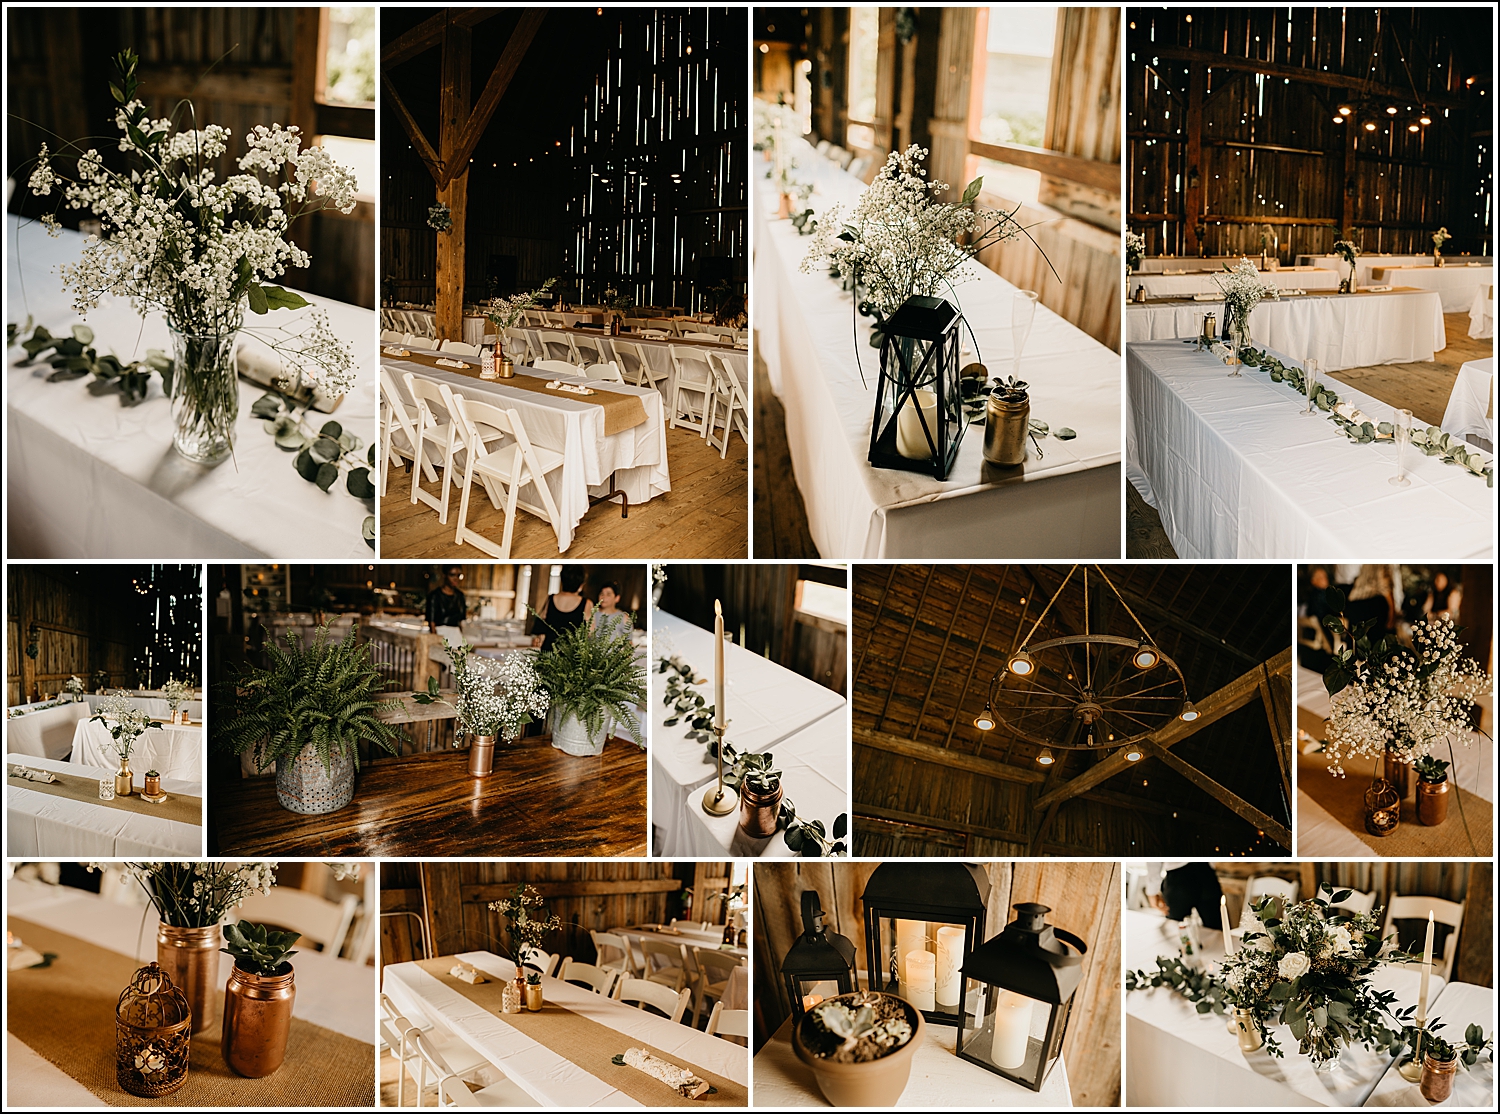 Tansy Hill Farm wedding decorations details baby's breath eucalyptus barn wedding Wisconsin Wedding Photographer